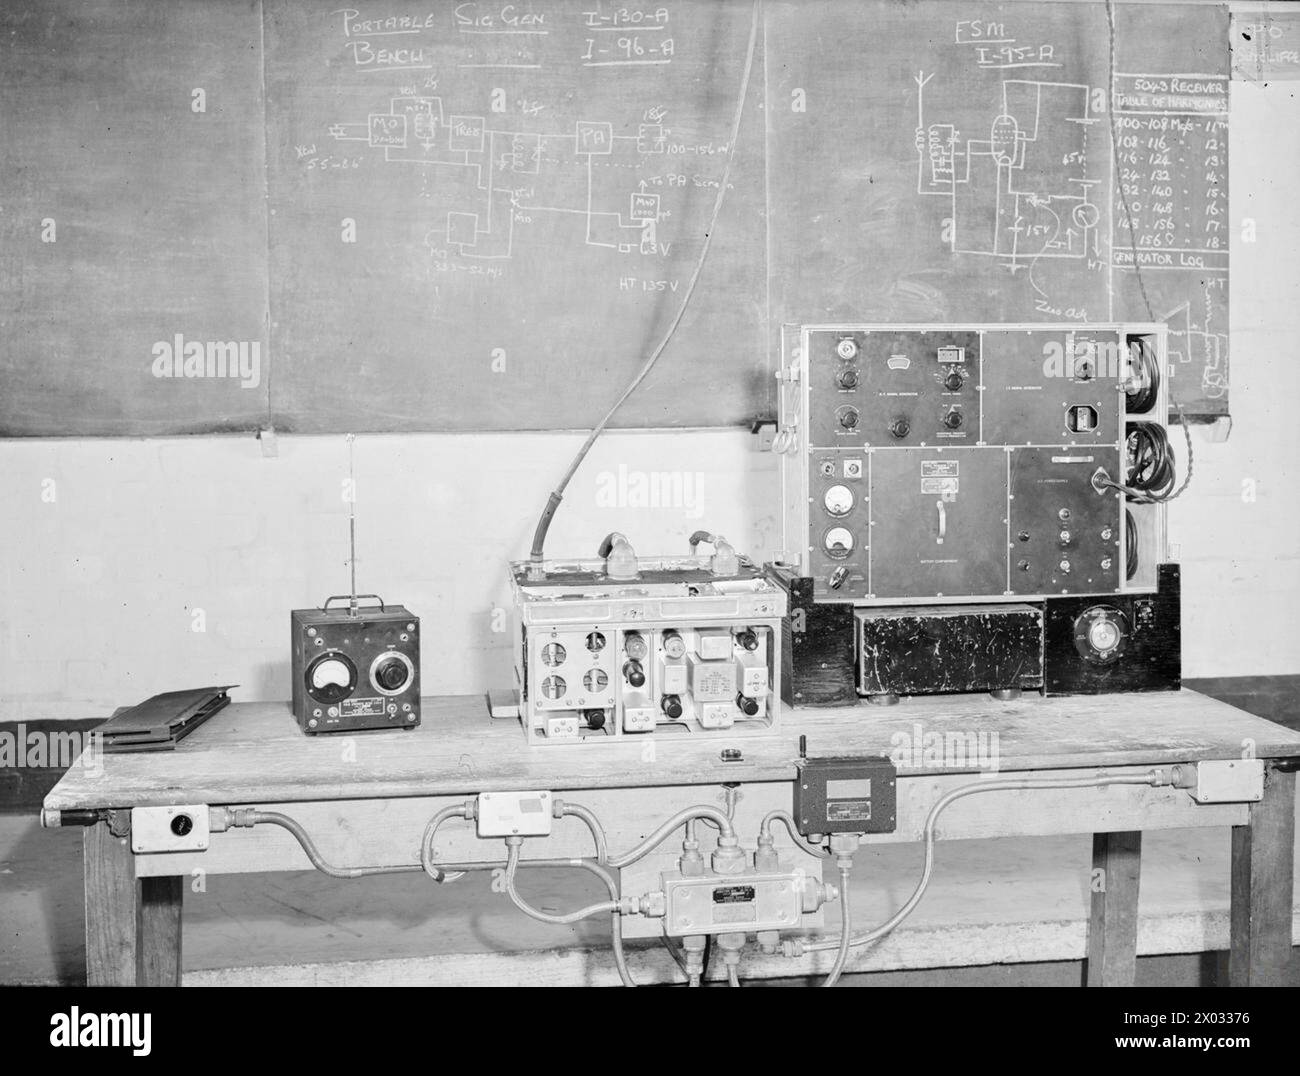 RADAR AND RADAR EQUIPMENT AT HMS ARIEL, ROYAL NAVAL AIR RADIO MECHANICS TRAINING ESTABLISHMENT NEAR WARRINGTON, 24 JULY 1945. - SCR 552 with associated test equipment Stock Photo